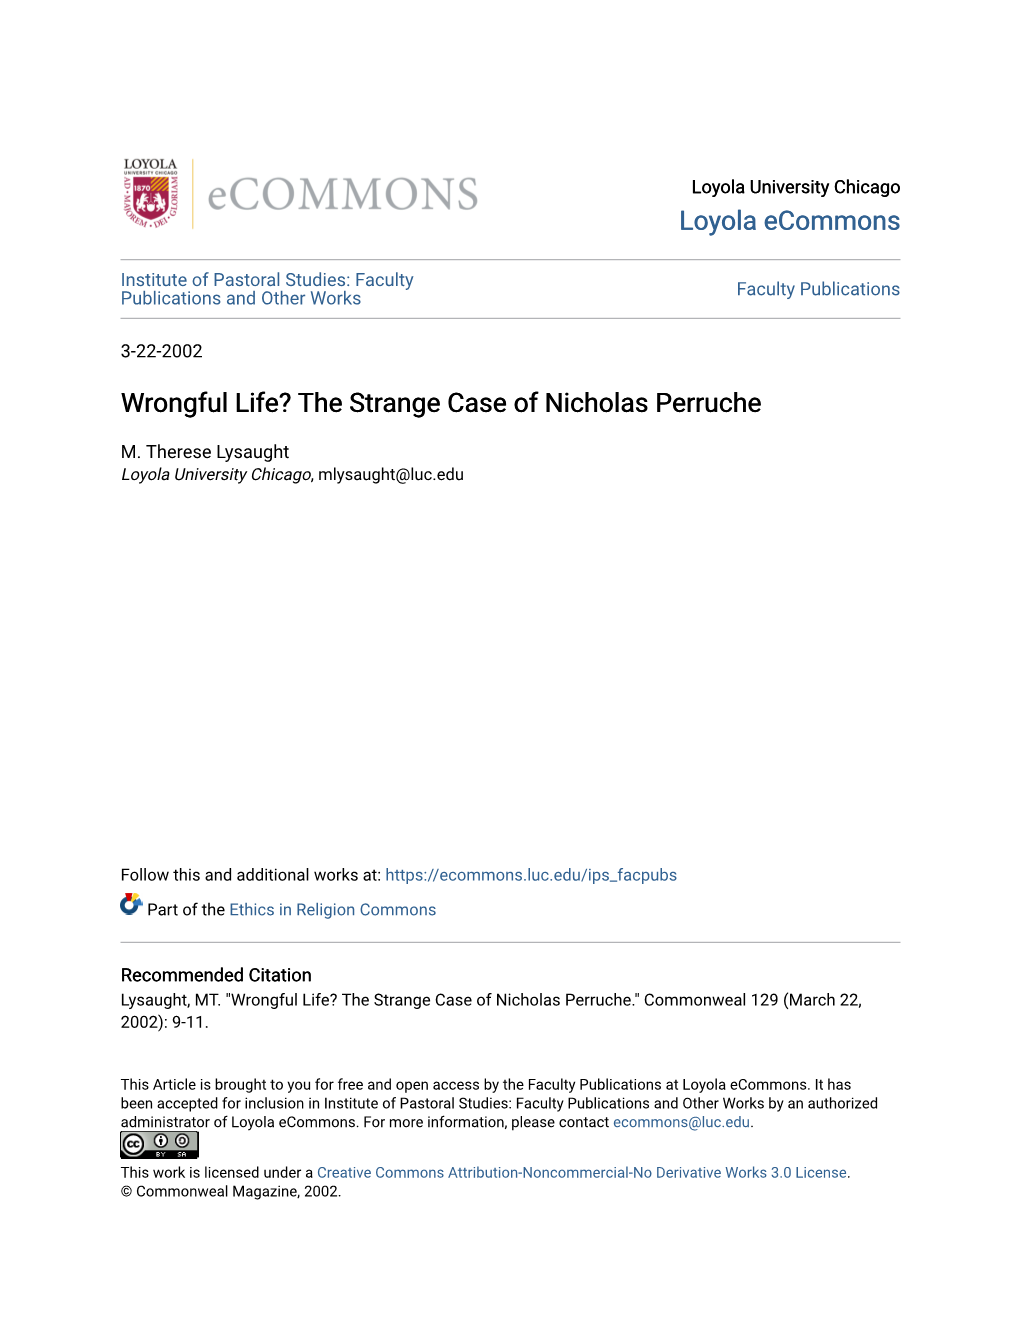 Wrongful Life? the Strange Case of Nicholas Perruche